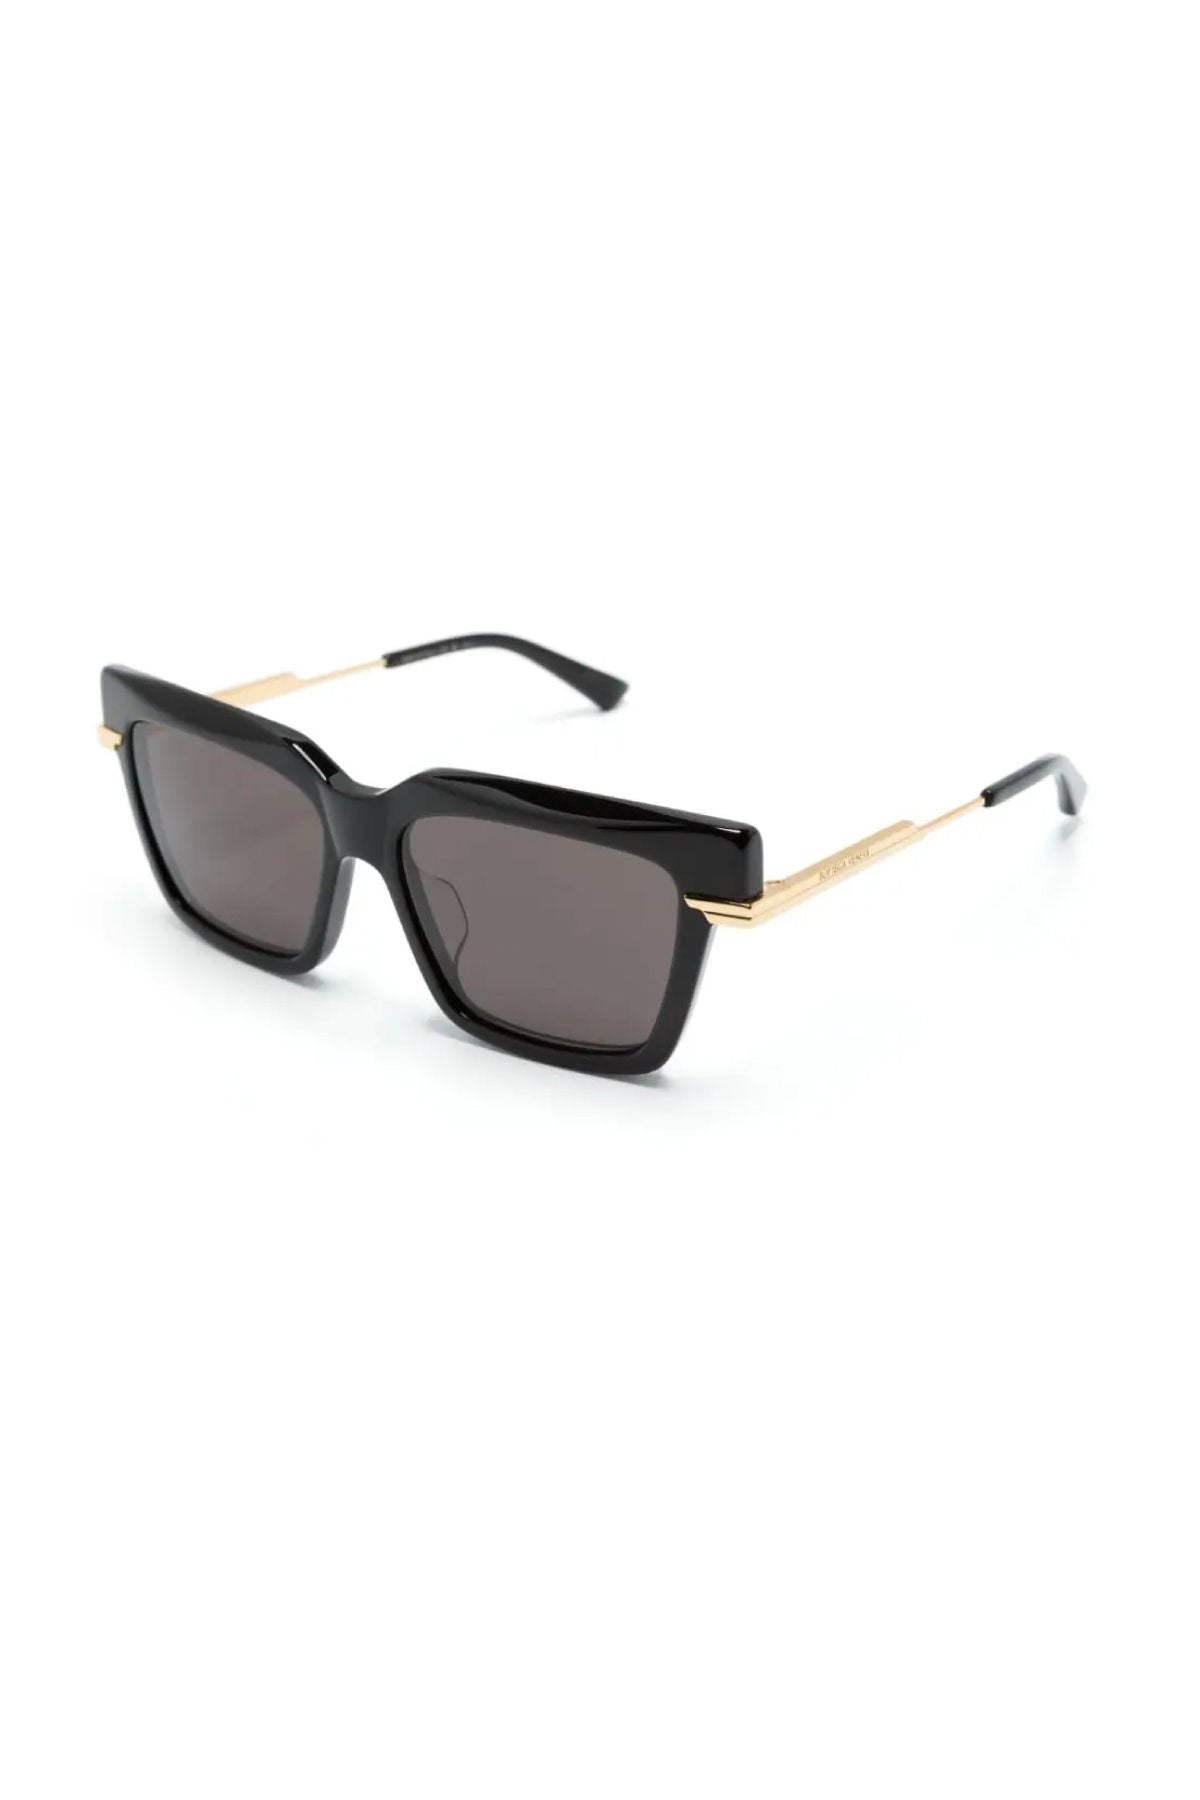 Bottega Veneta Oversized Square Sunglasses - Black